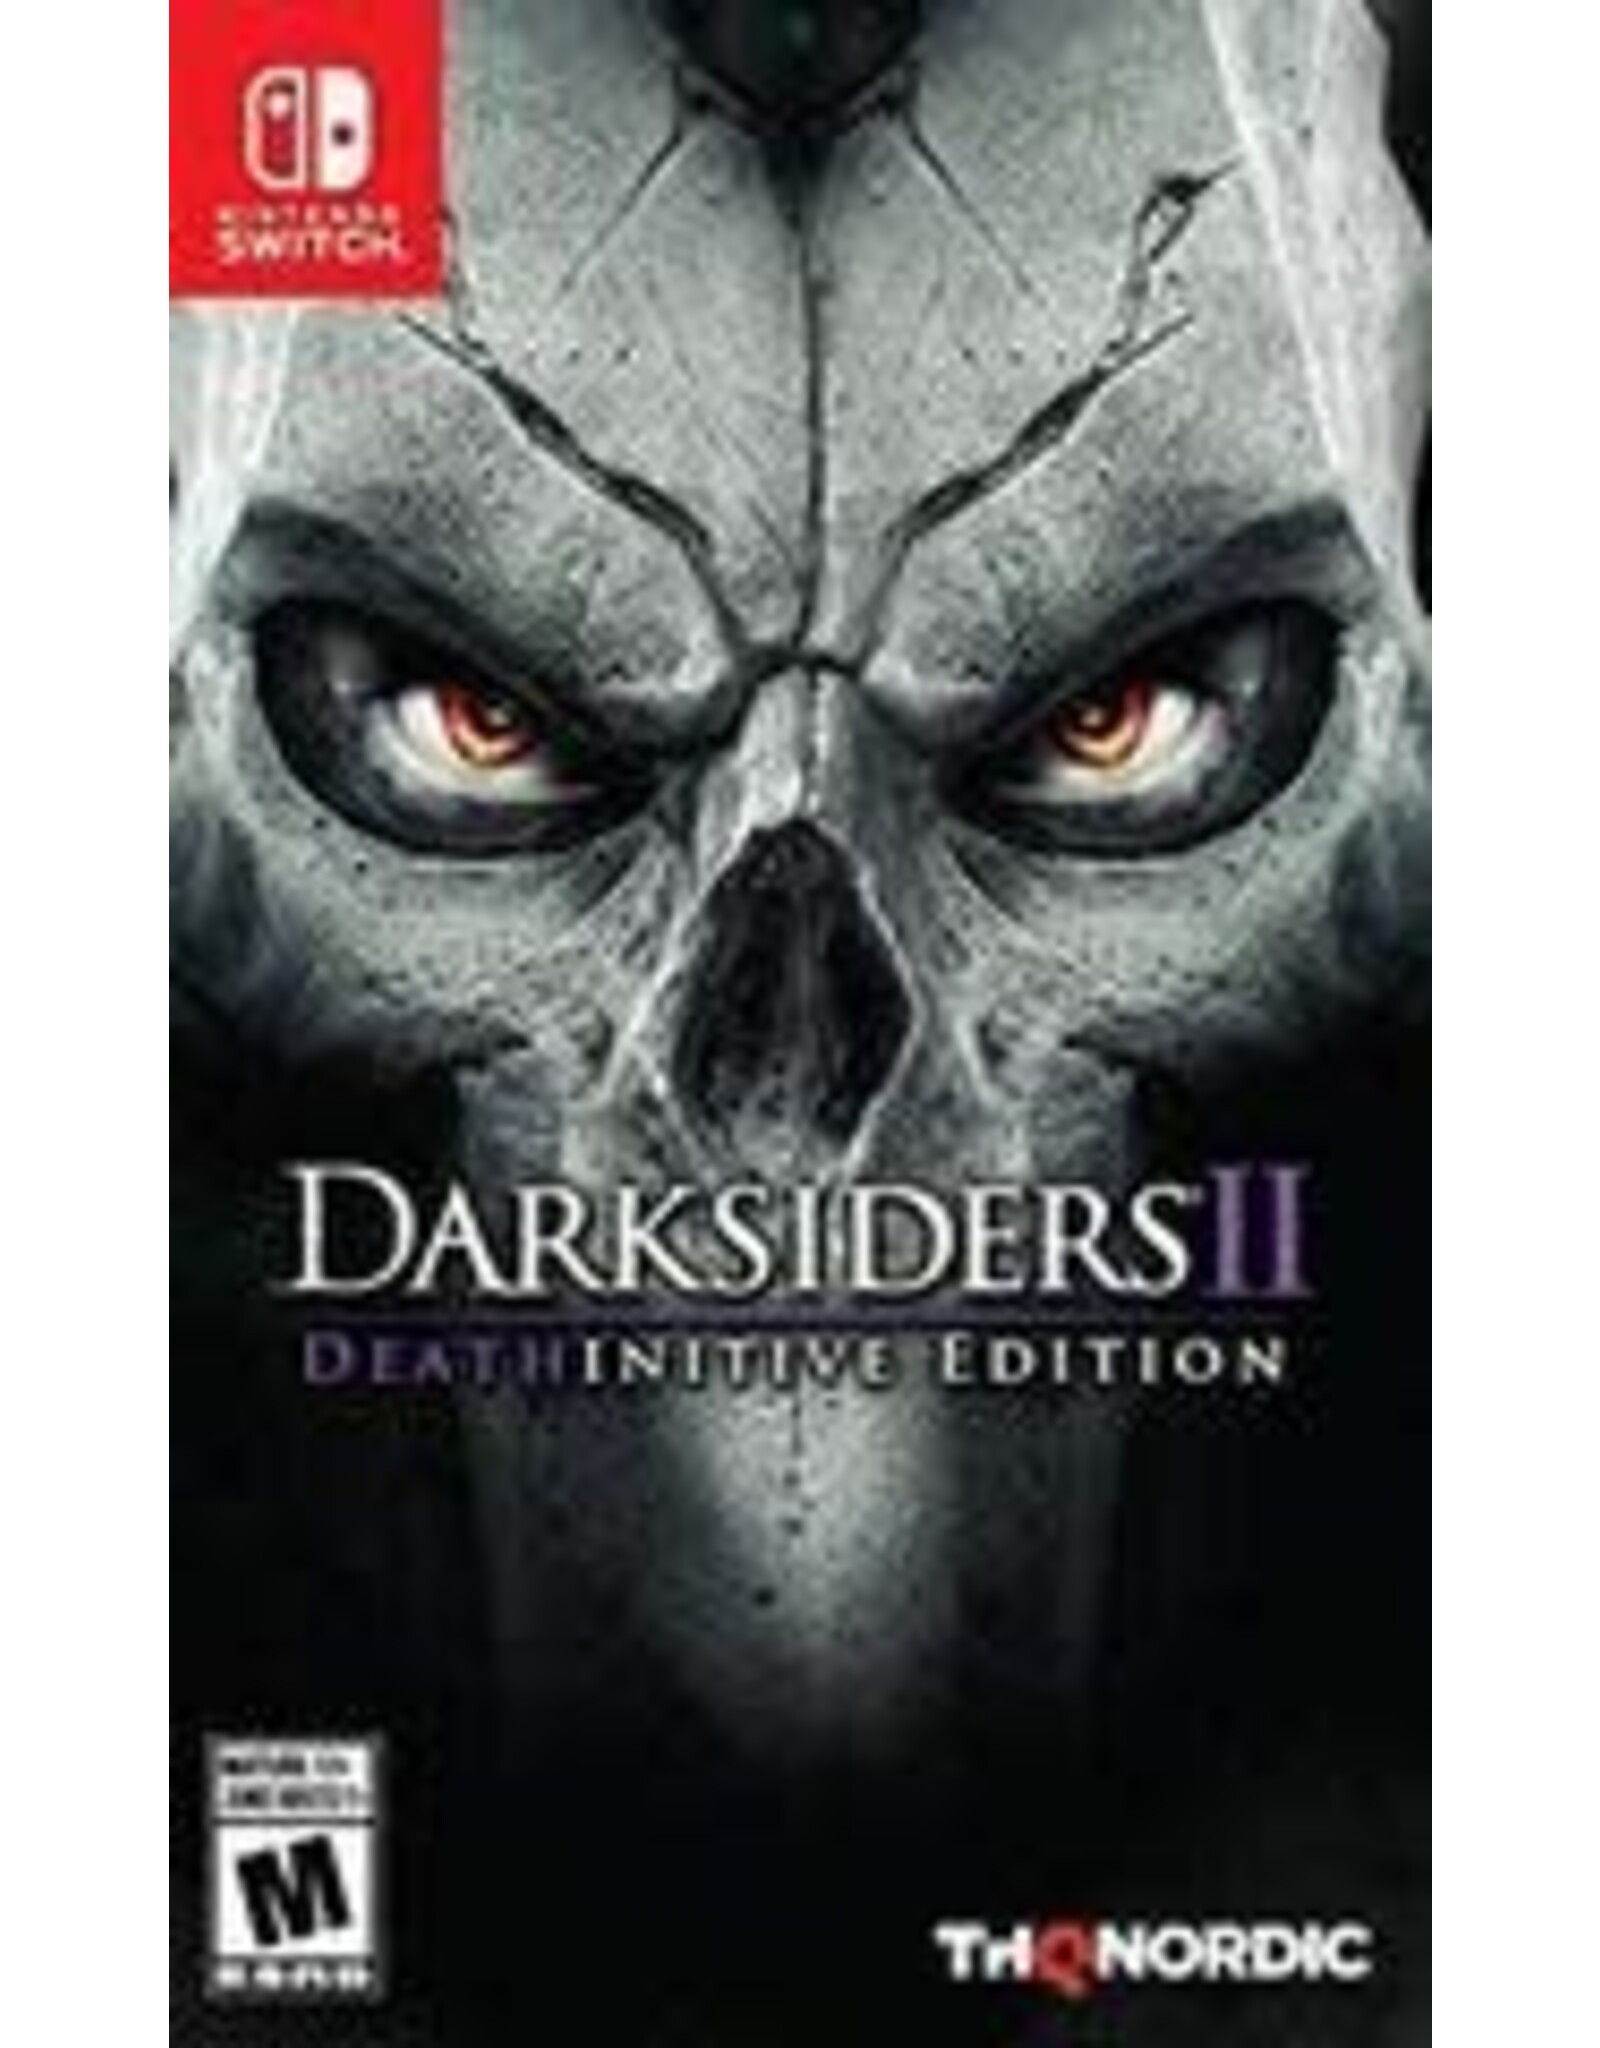 Used Game - Nintendo Switch - Darksiders II Deathinitive Edition [CIB]